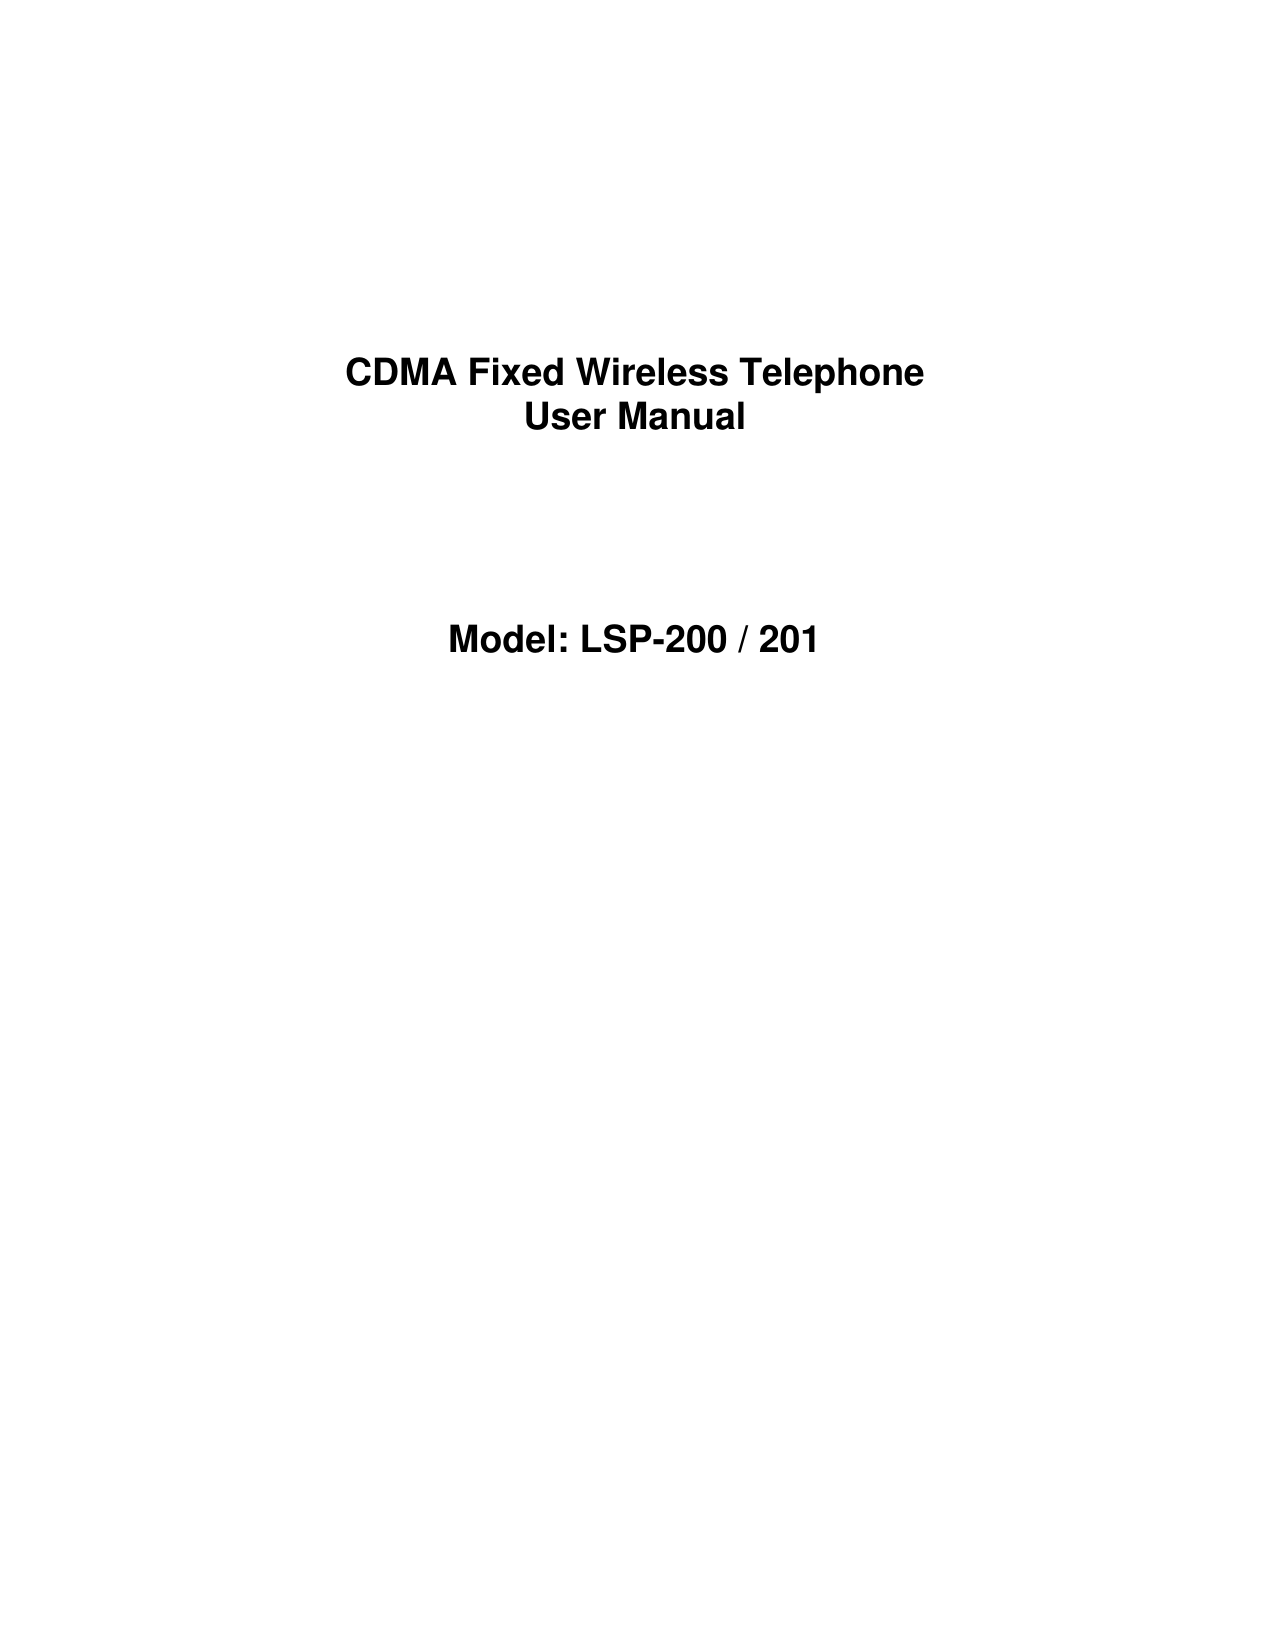 CDMA Fixed Wireless TelephoneUser ManualModel: LSP-200 / 201